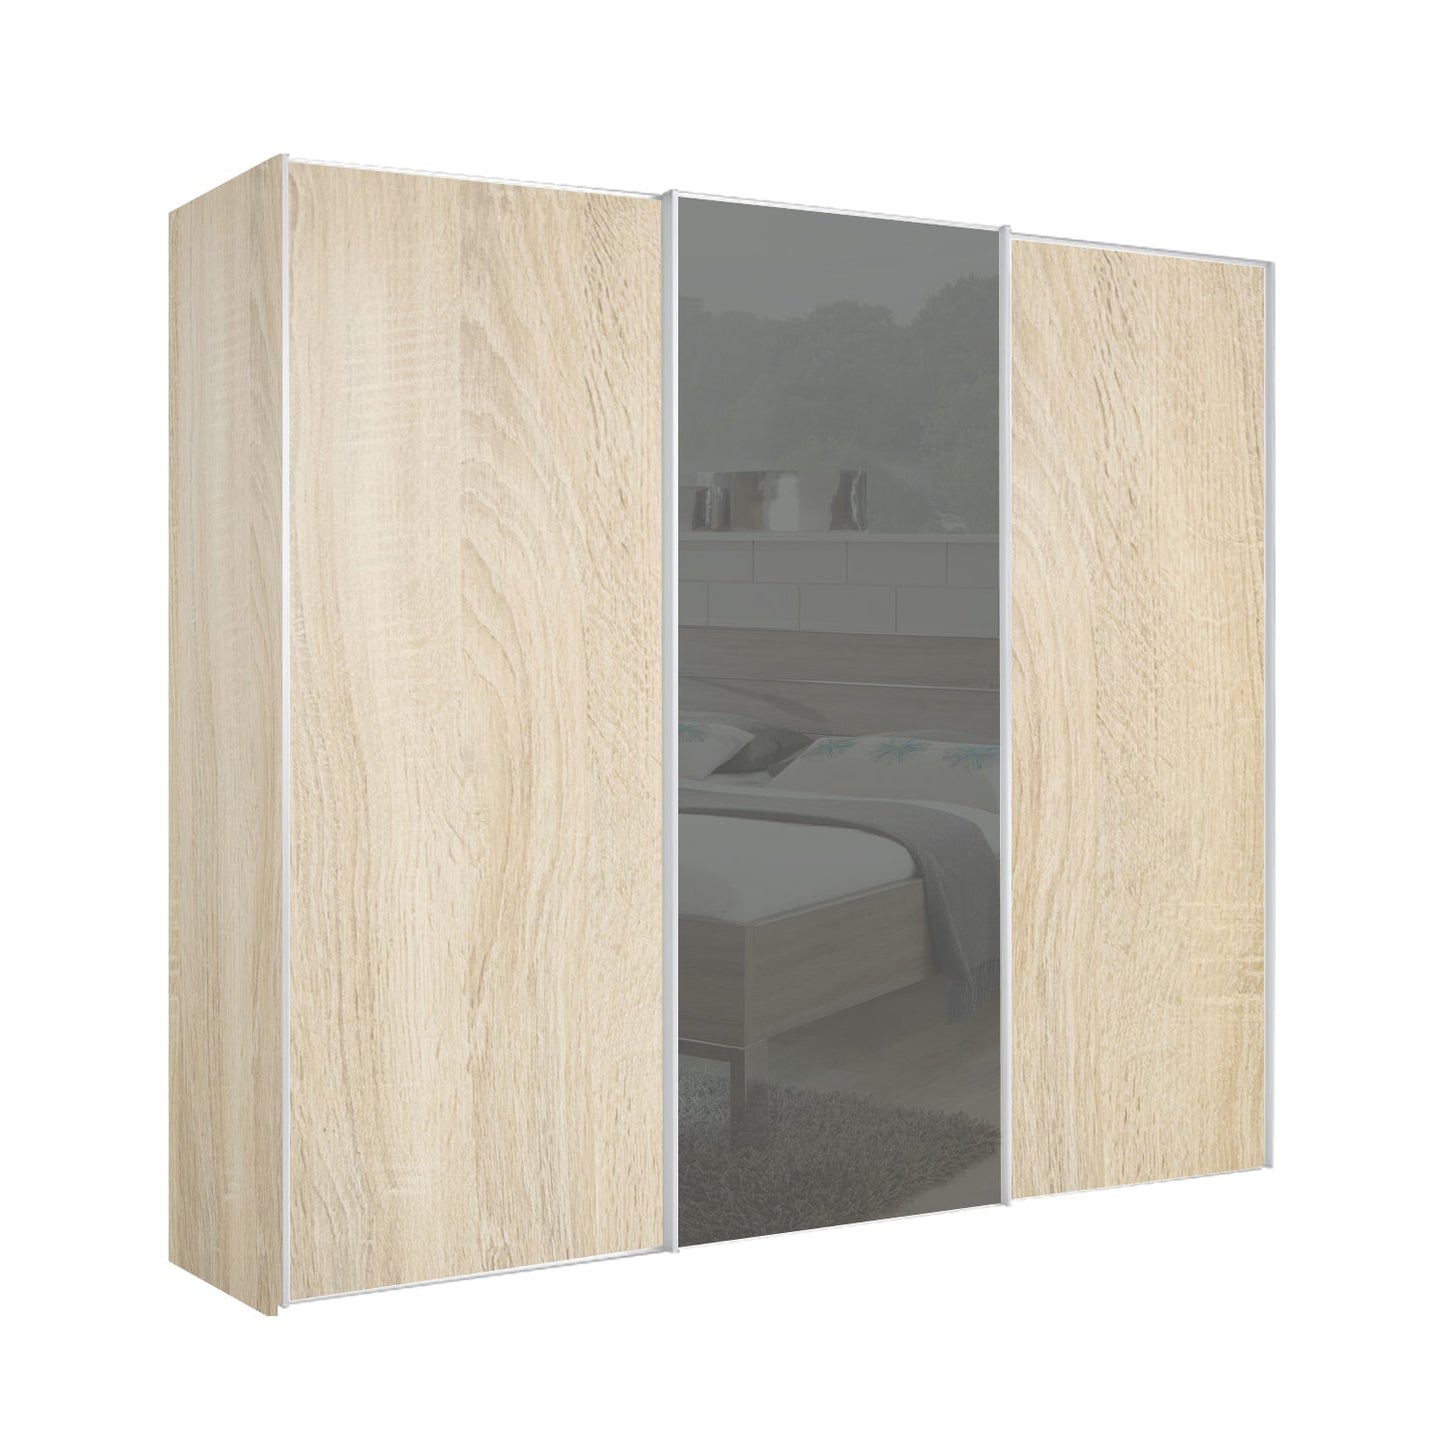 Chicago 225cm Sliding Wardrobe - Wood & Glass Door